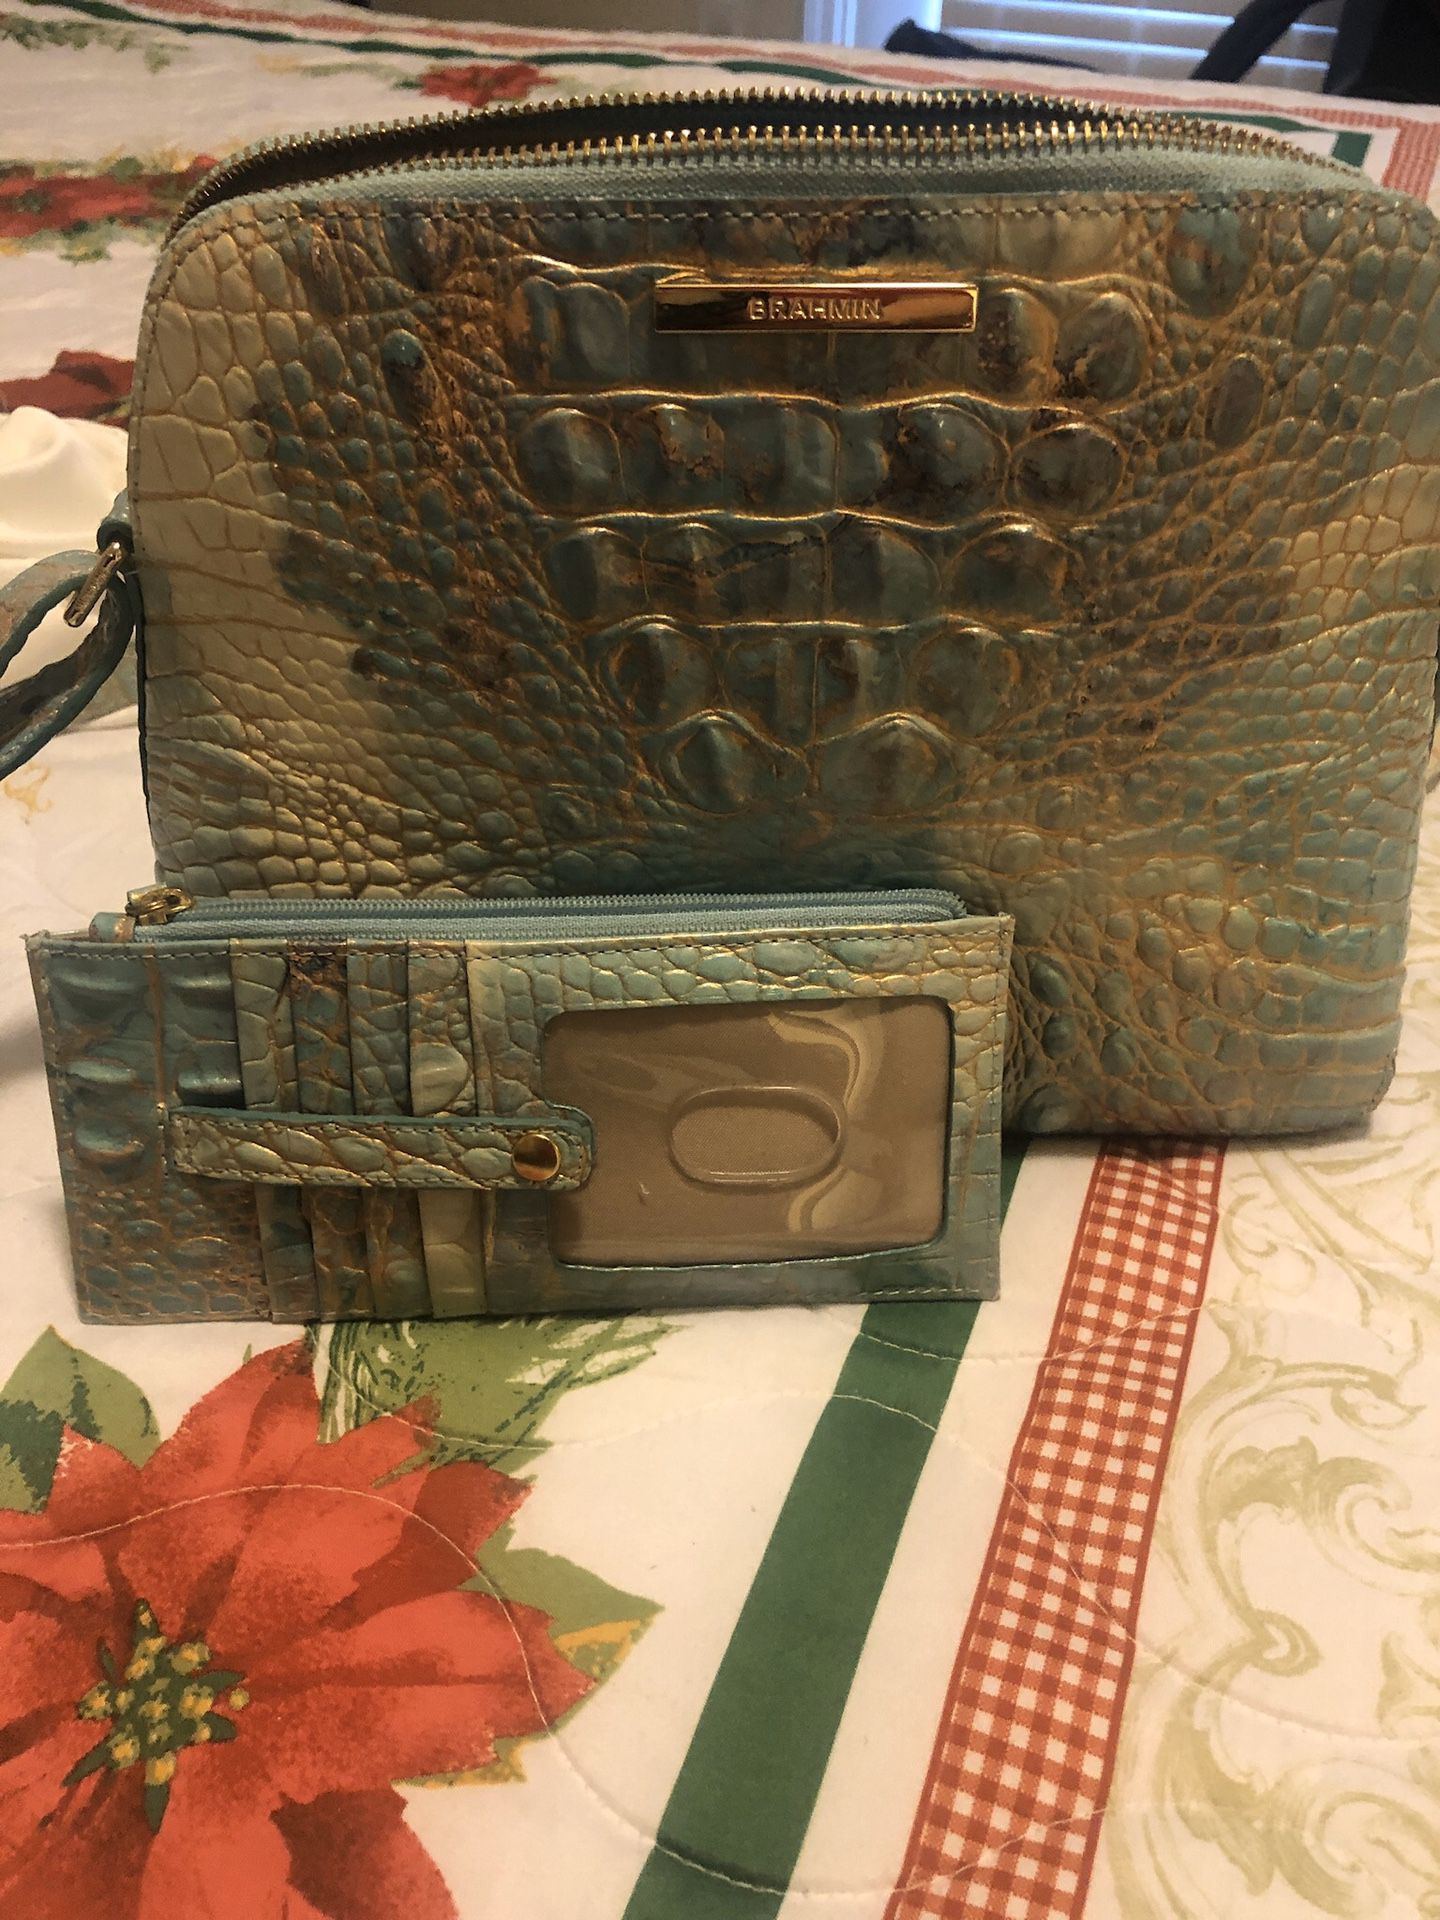 Brahmin purse and wallet